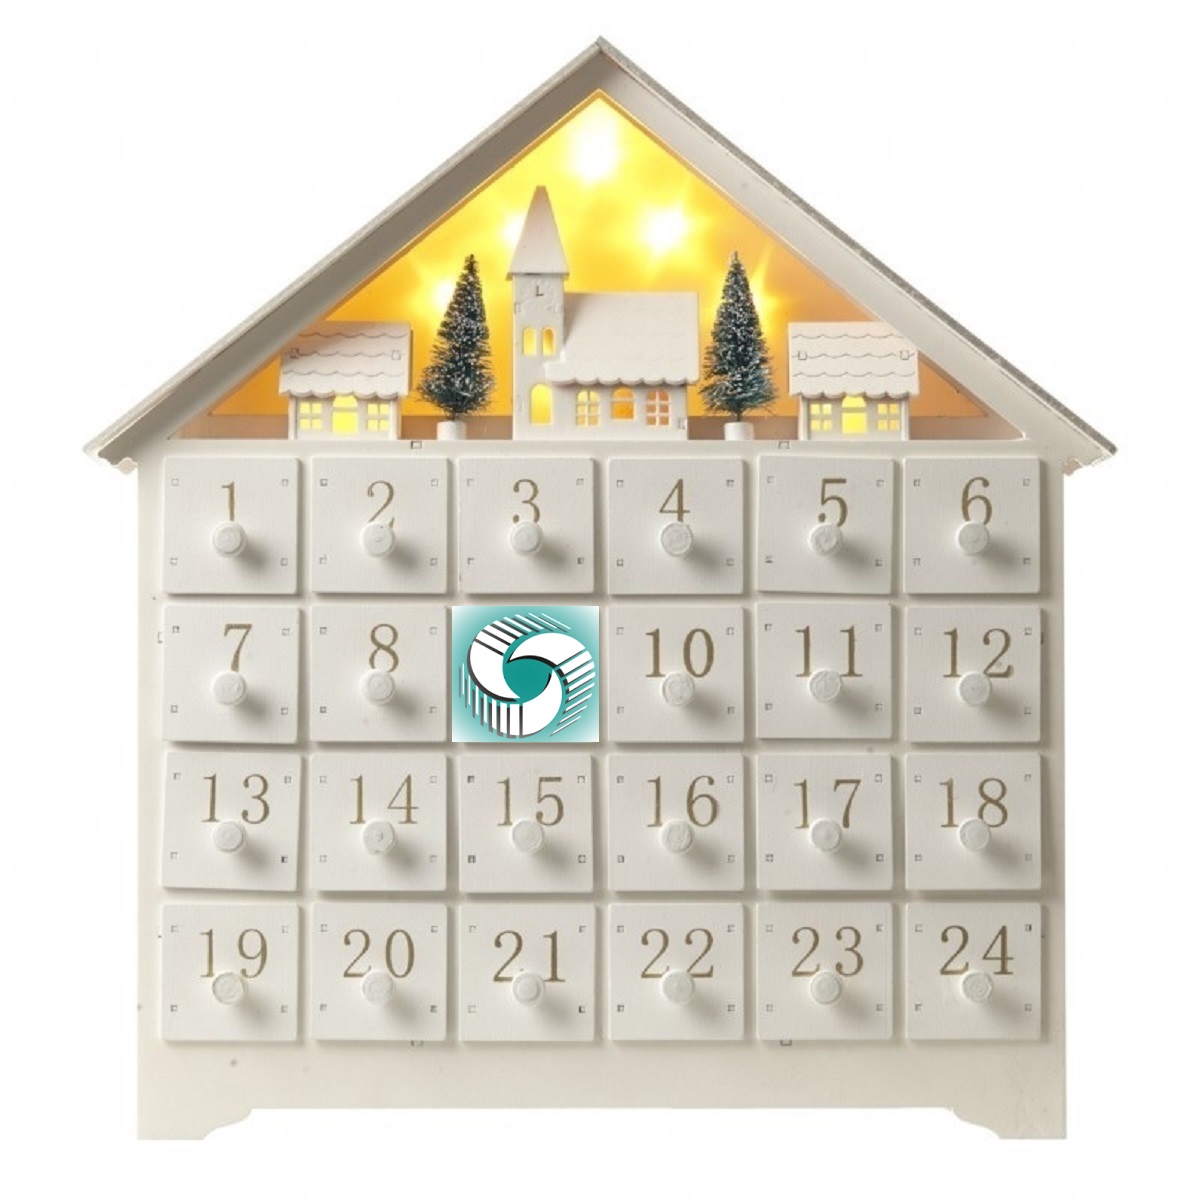 Day 9 – Frontier’s Advent Calendar